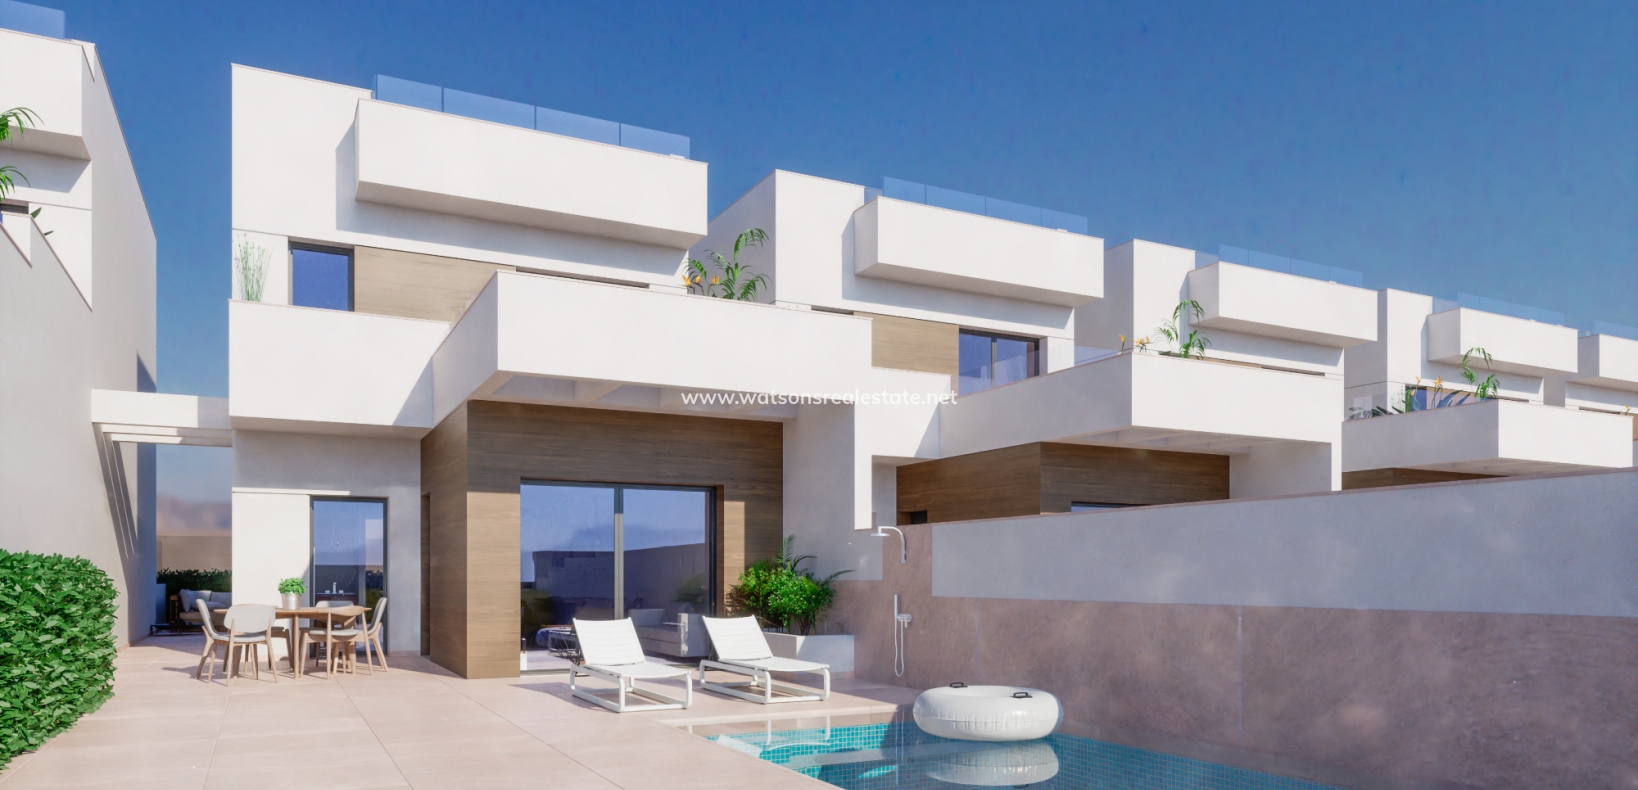 New build villas for sale in Costa Blanca